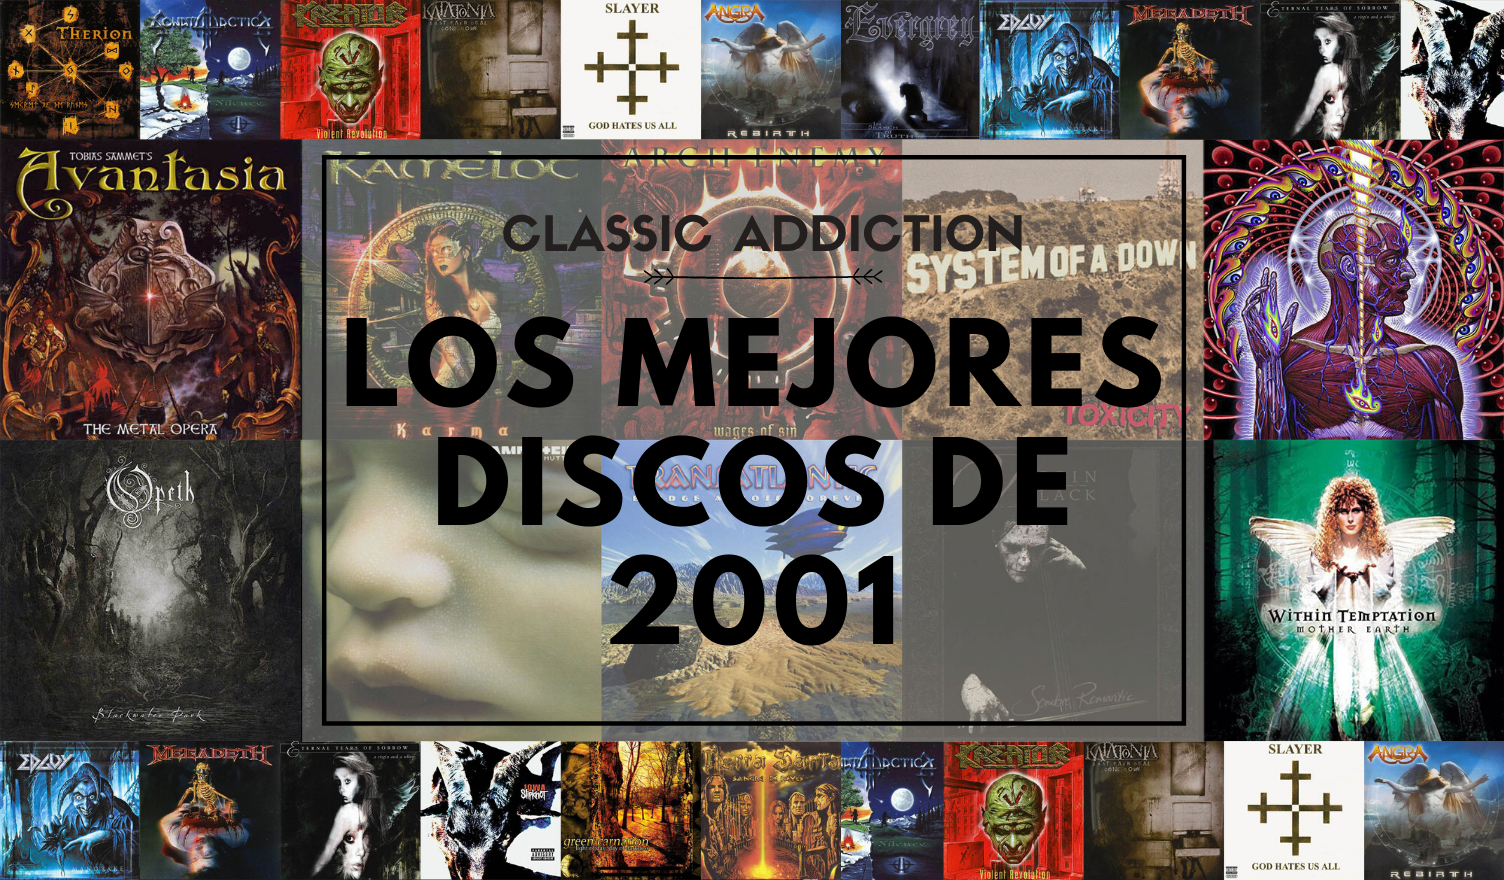 Classic Addiction: Los Mejores Discos de 2001